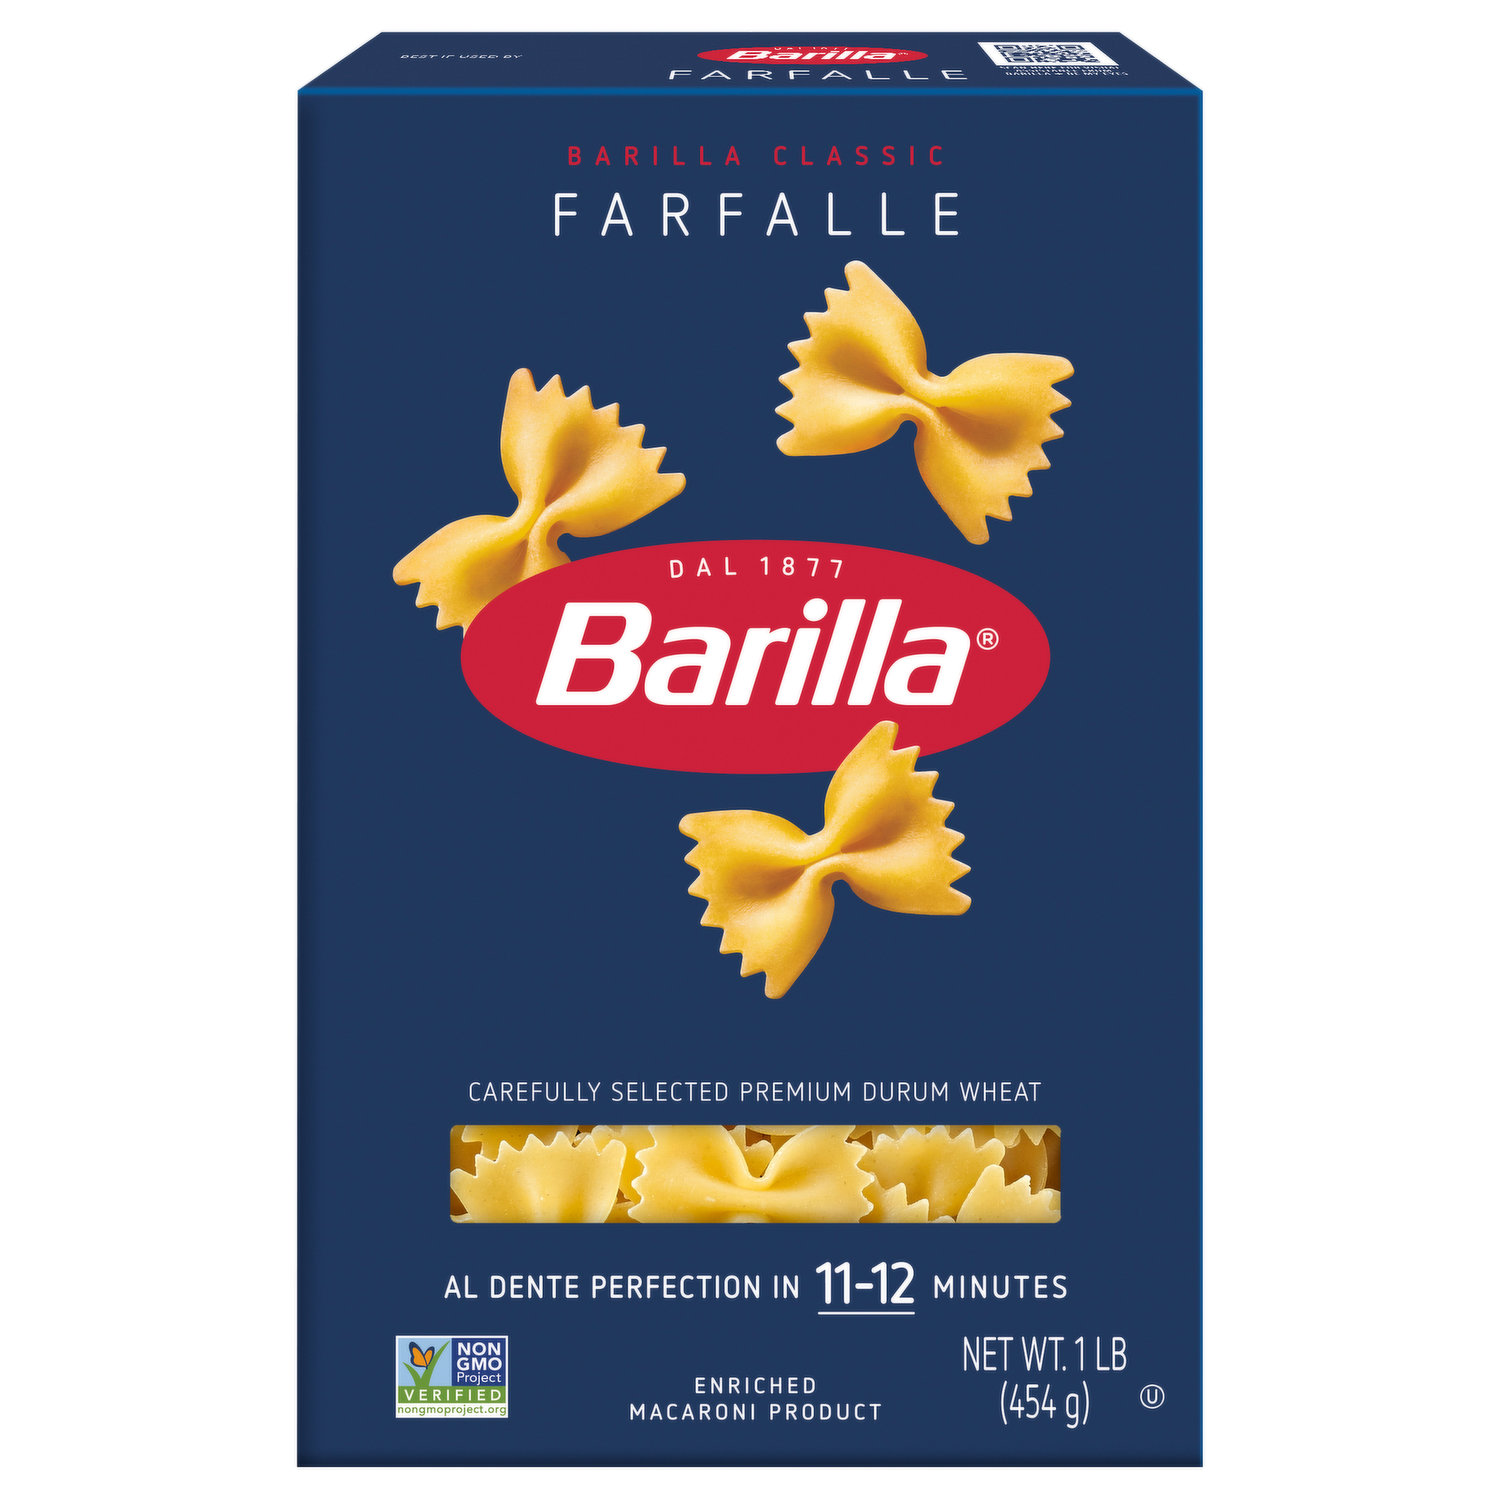 Classic Barilla Farfalle,